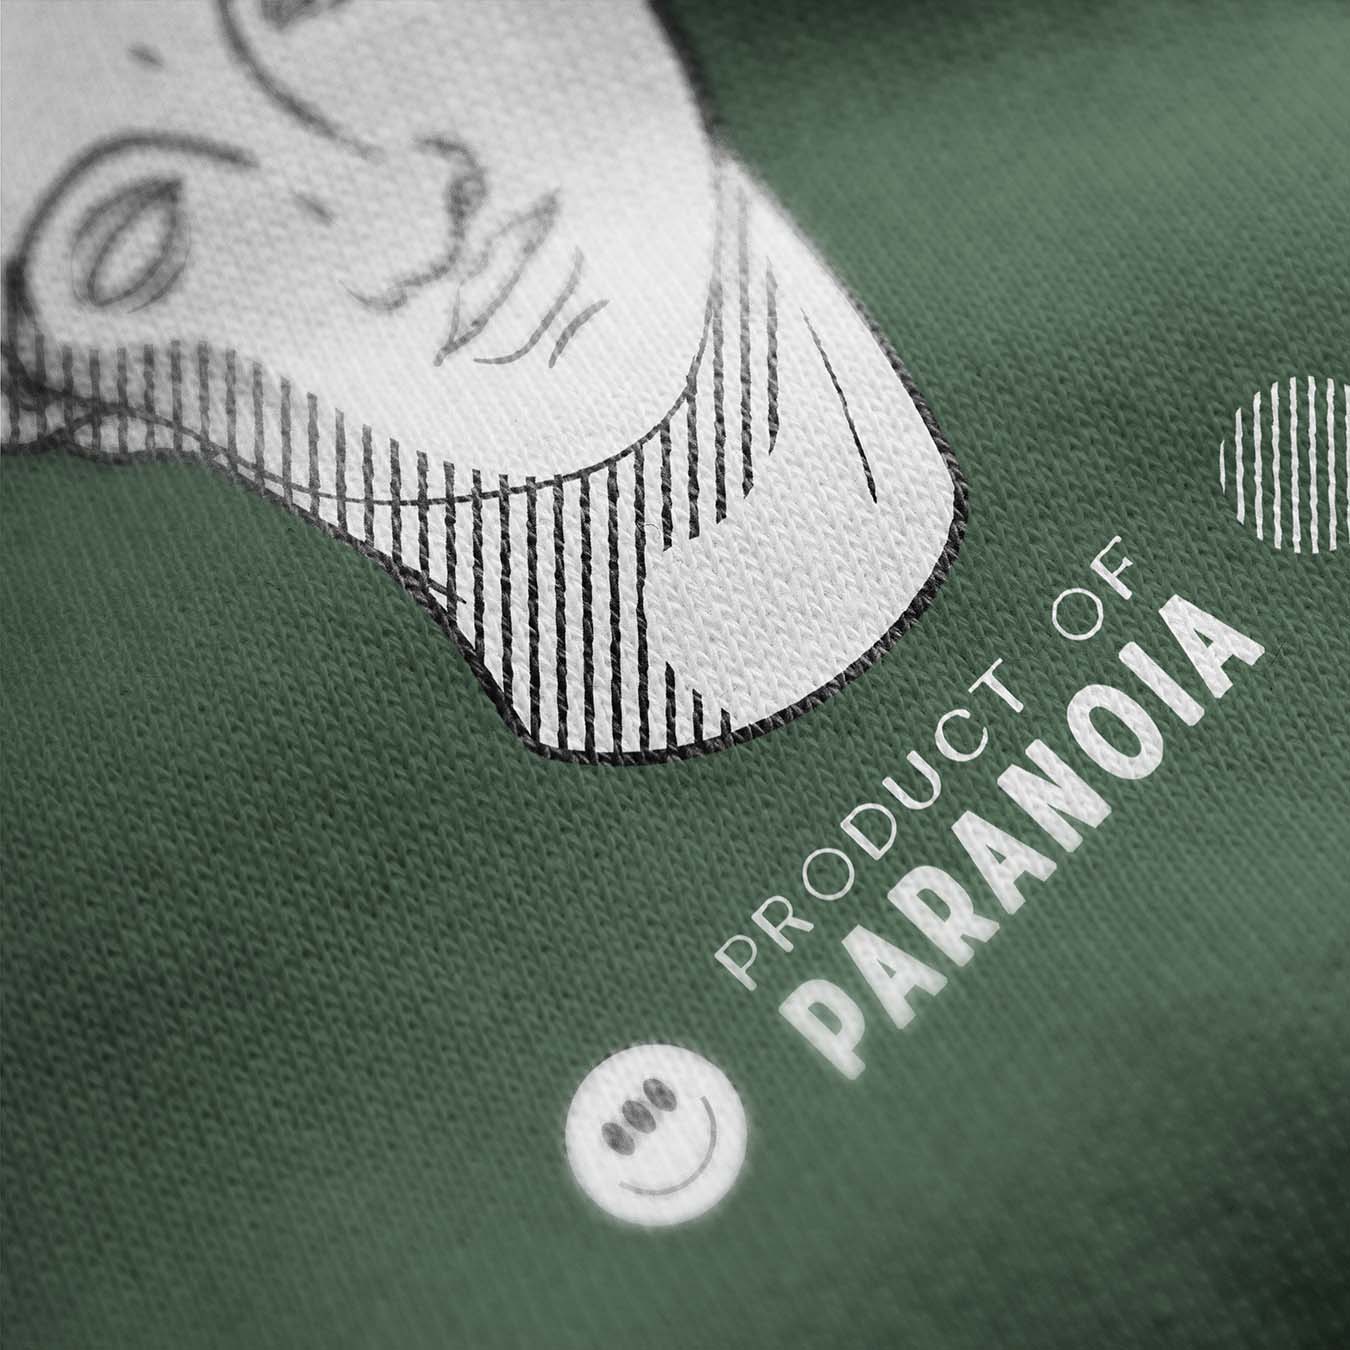 Product of Paranoia Graphic Sweatshirt - keos.life